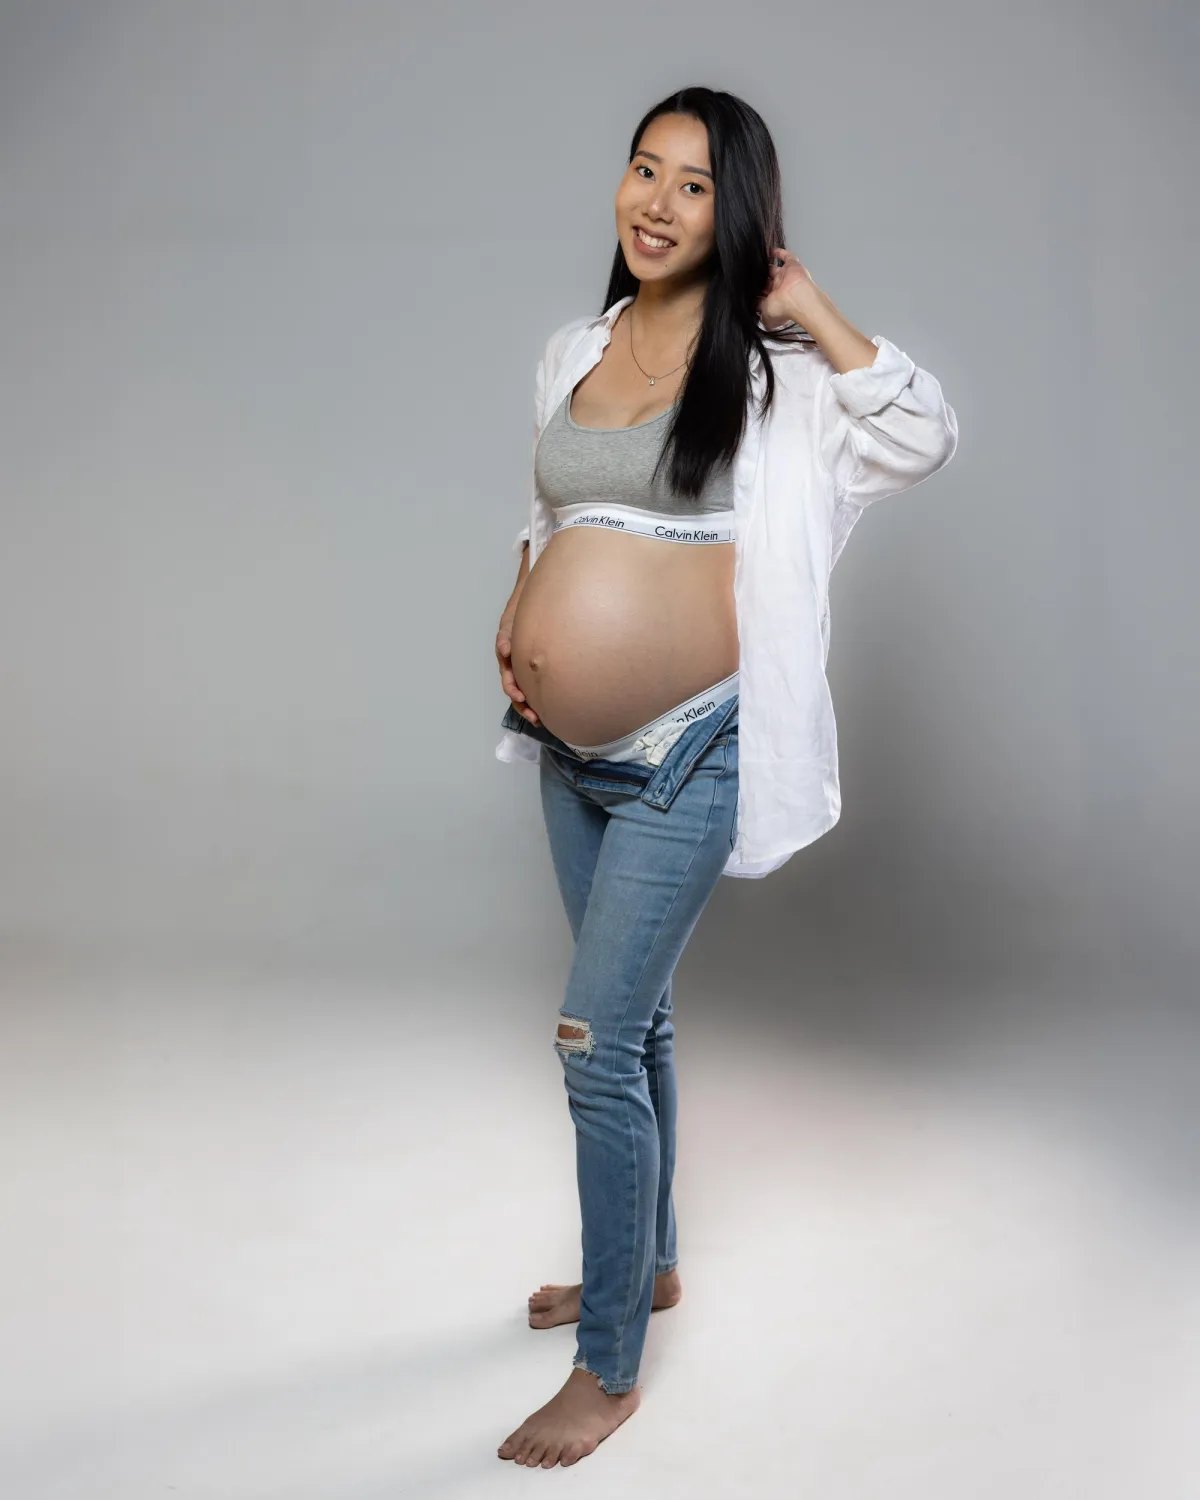 Pregnancy photo shoot in studio Honolulu. 